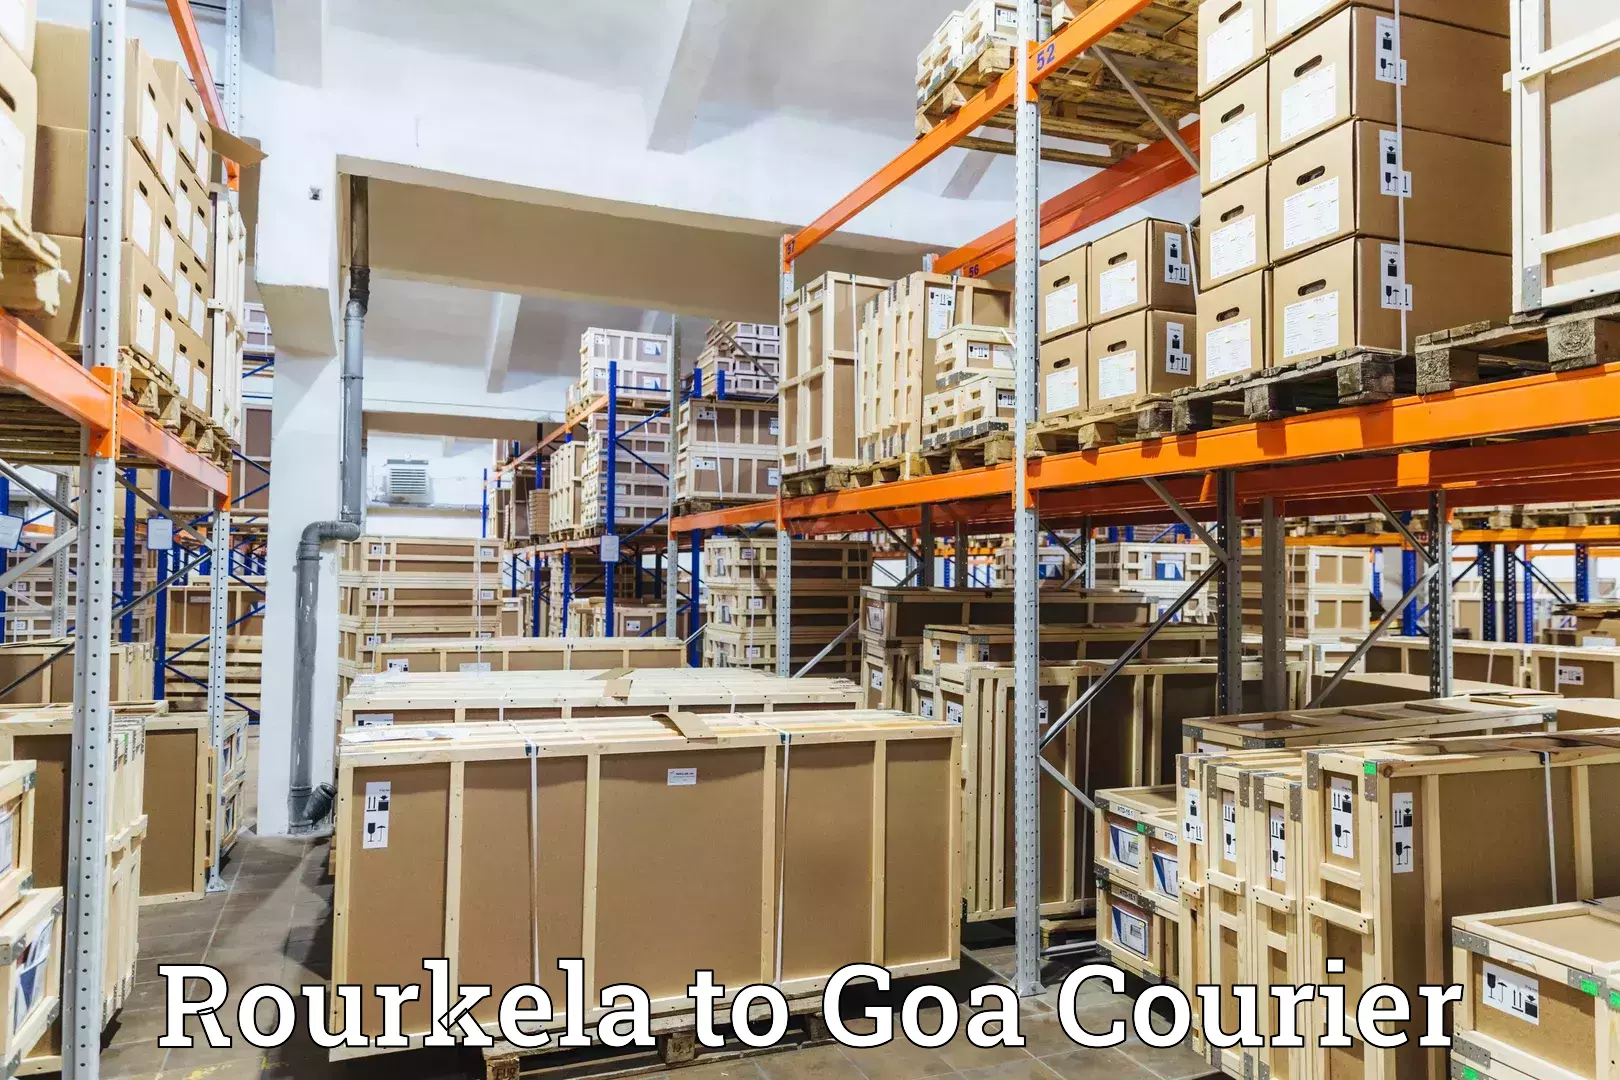 User-friendly courier app Rourkela to Panaji